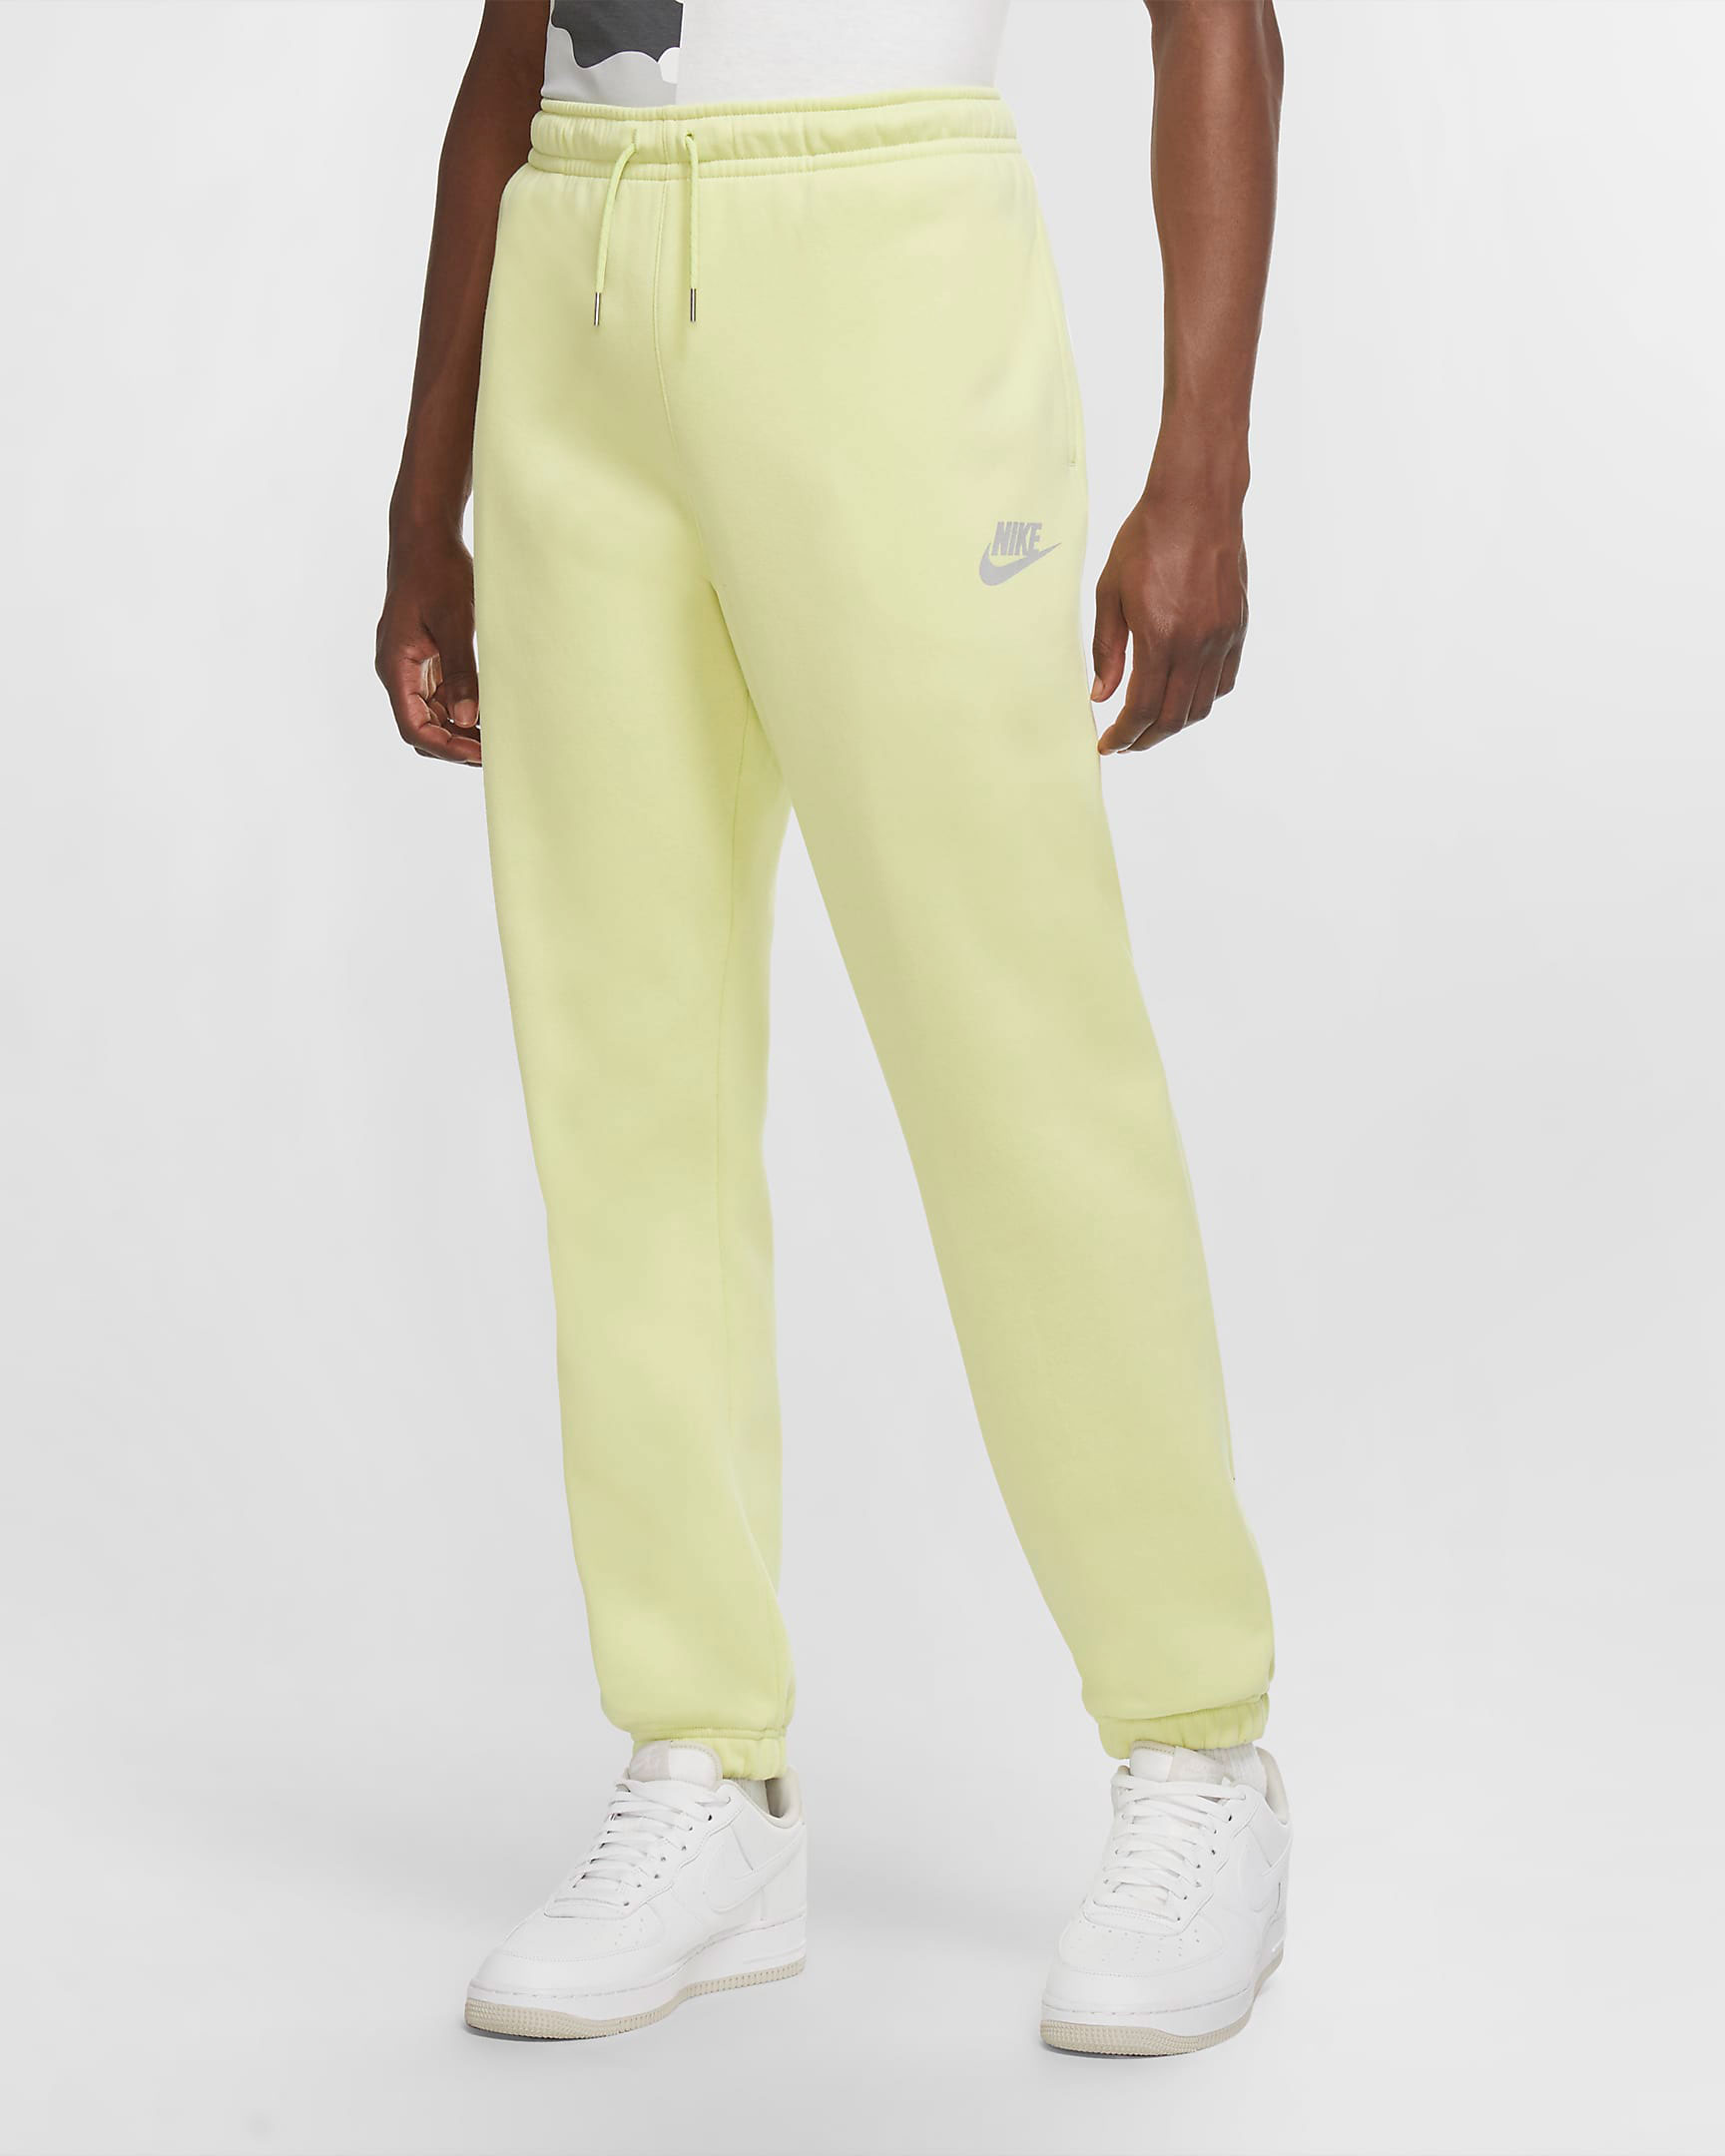 nike-air-max-95-neon-yellow-volt-fleece-pants